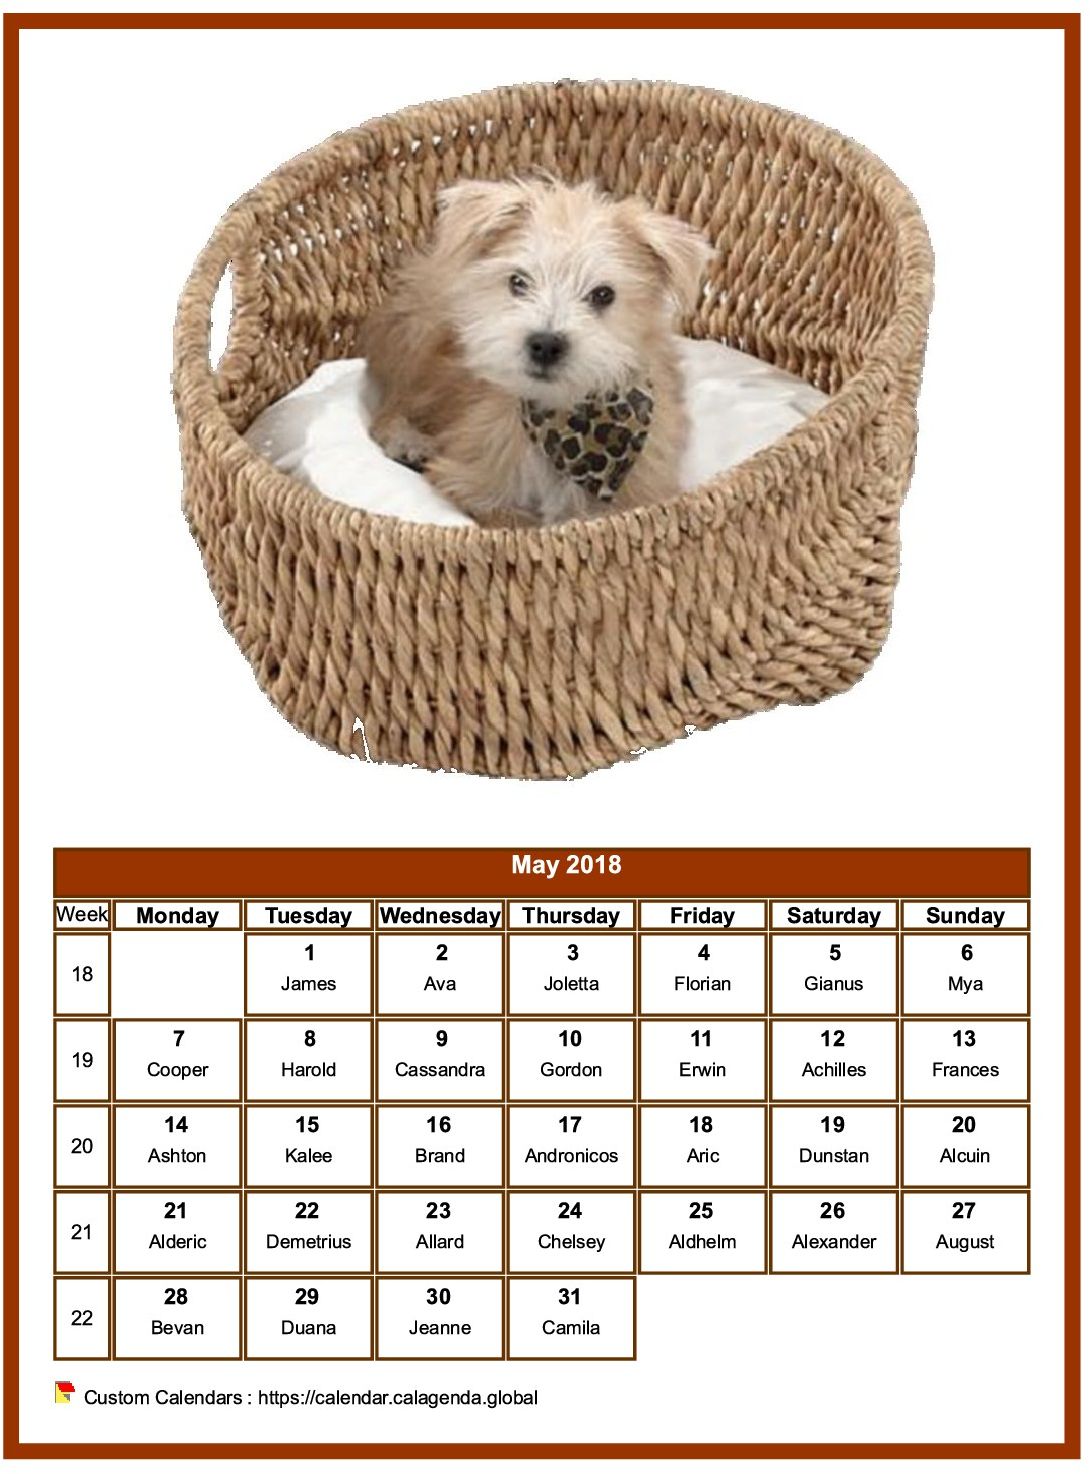 Calendar May 2018 dogs